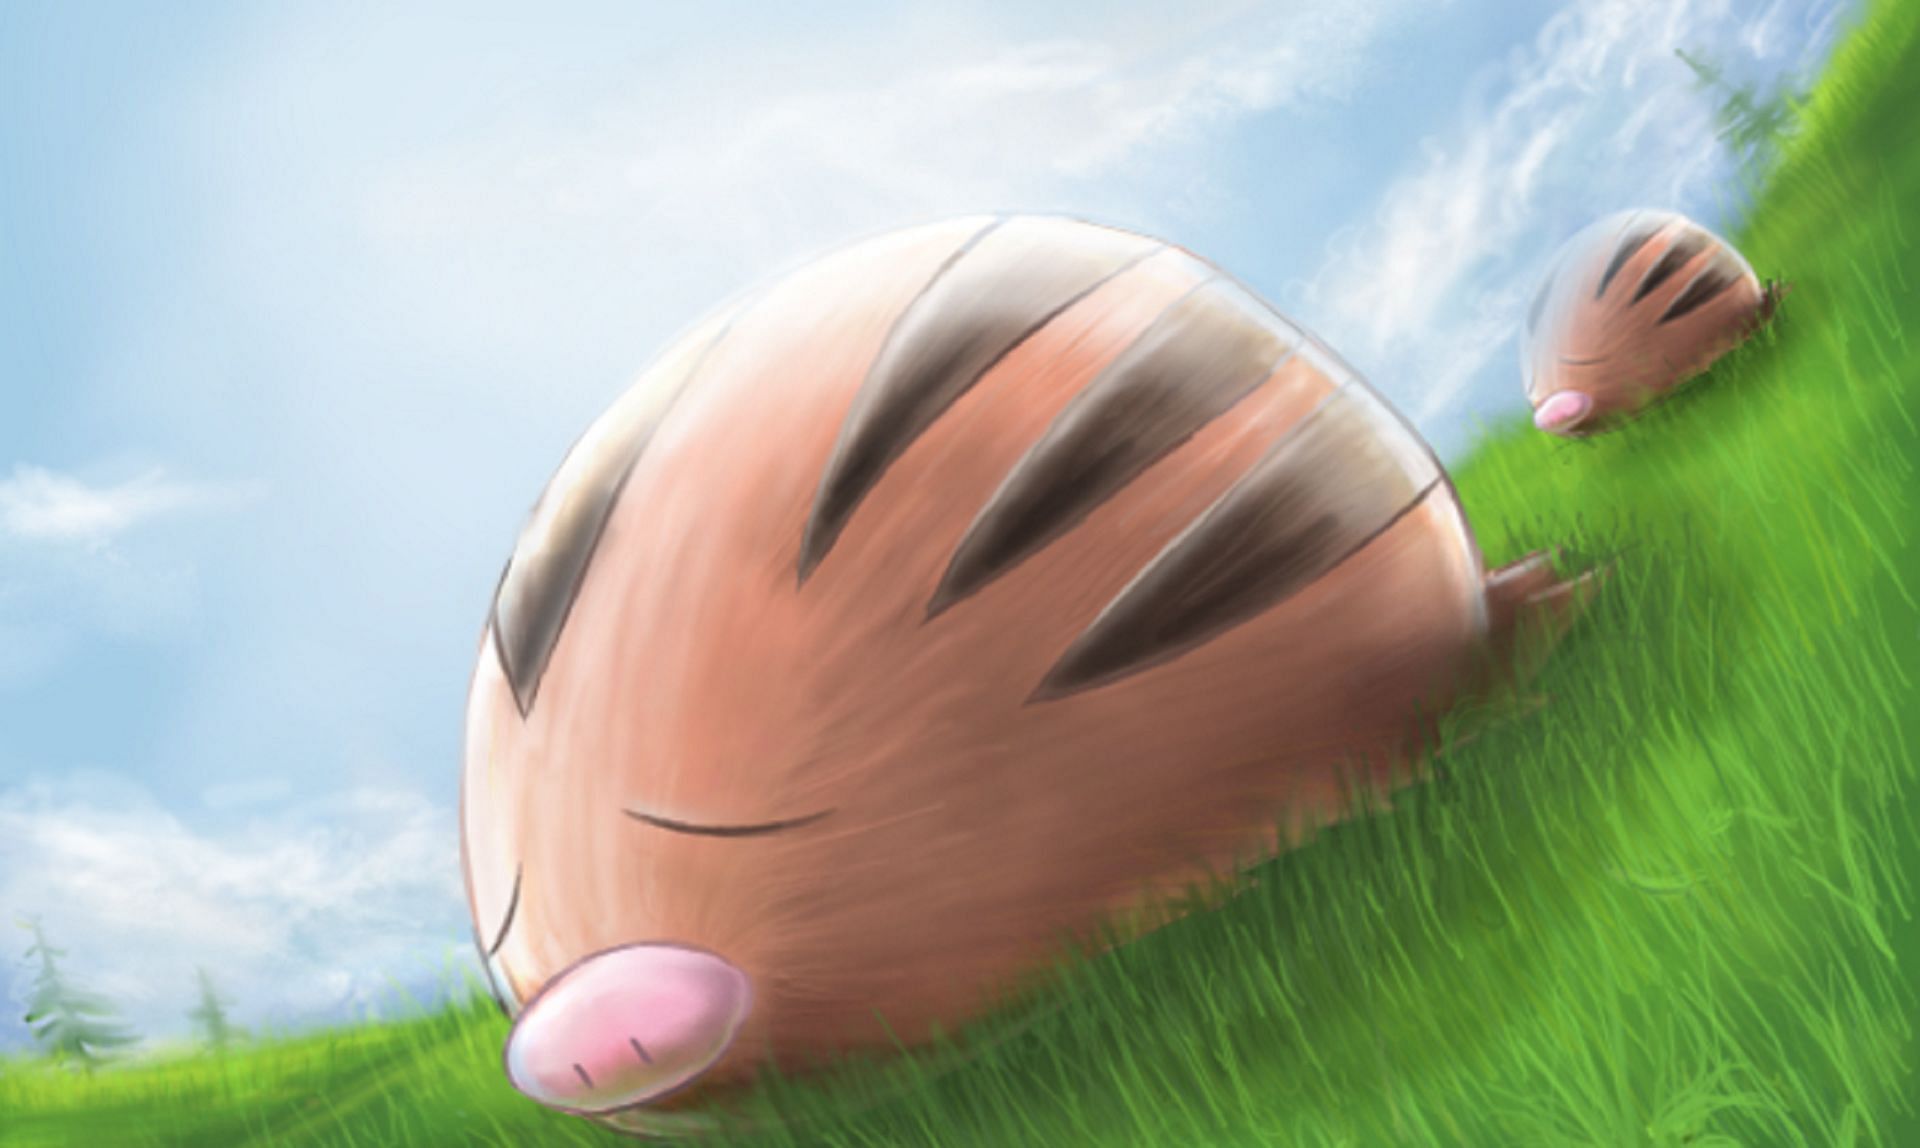 Swinub in the trading card game (Image via The Pokemon Company)